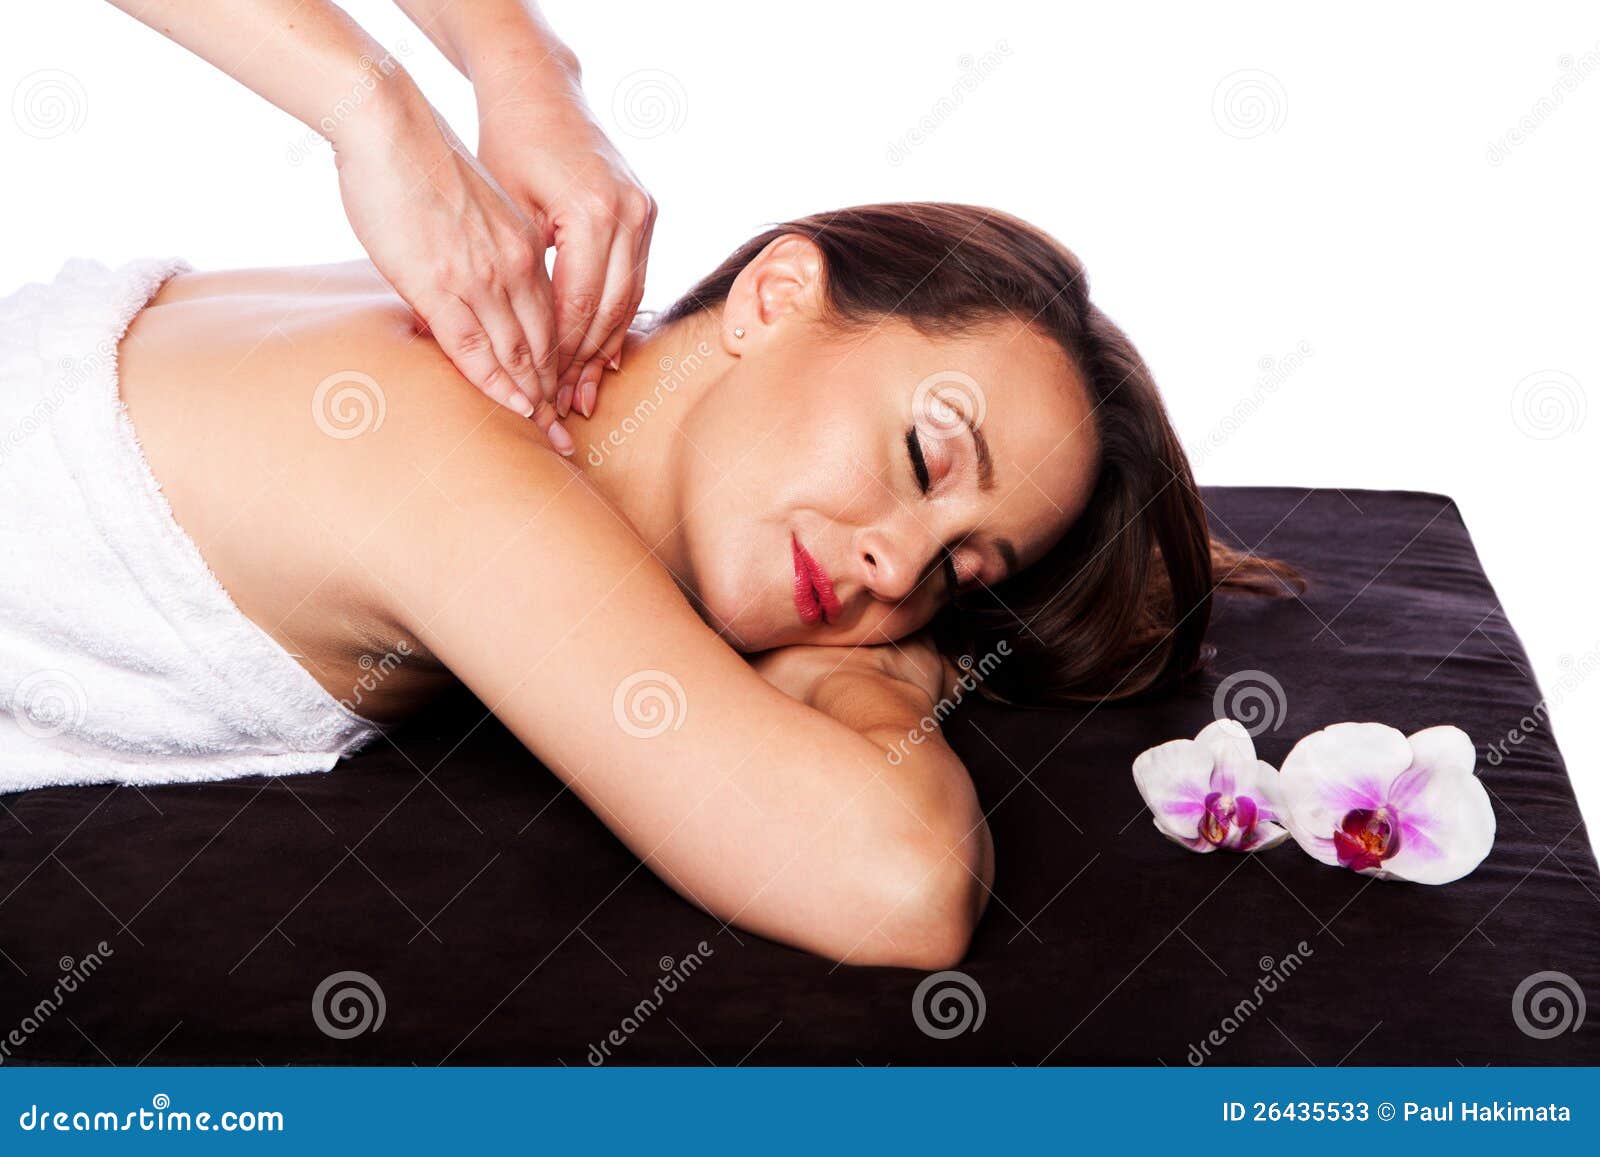 https://thumbs.dreamstime.com/z/relaxing-neck-shoulder-massage-spa-26435533.jpg